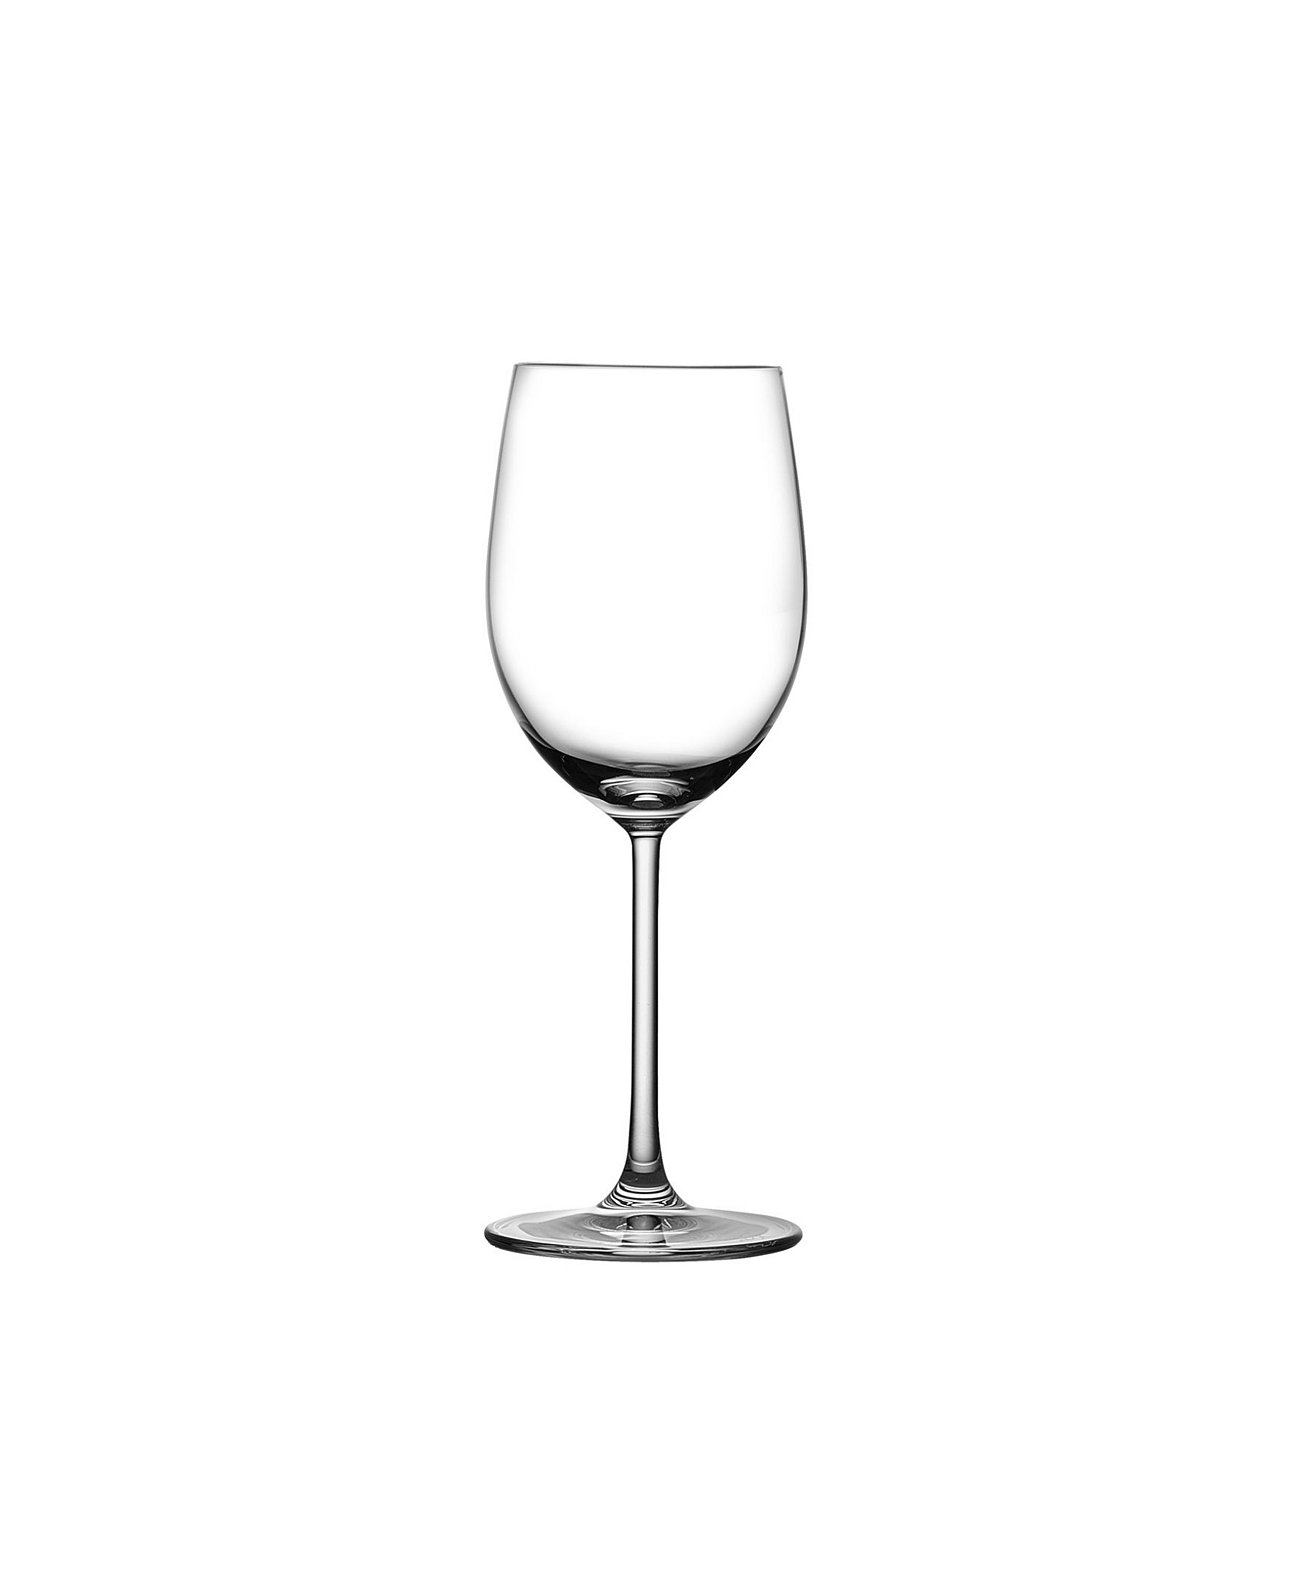 Бокал для белого вина в винтажном стиле, 2 шт. Nude Glass